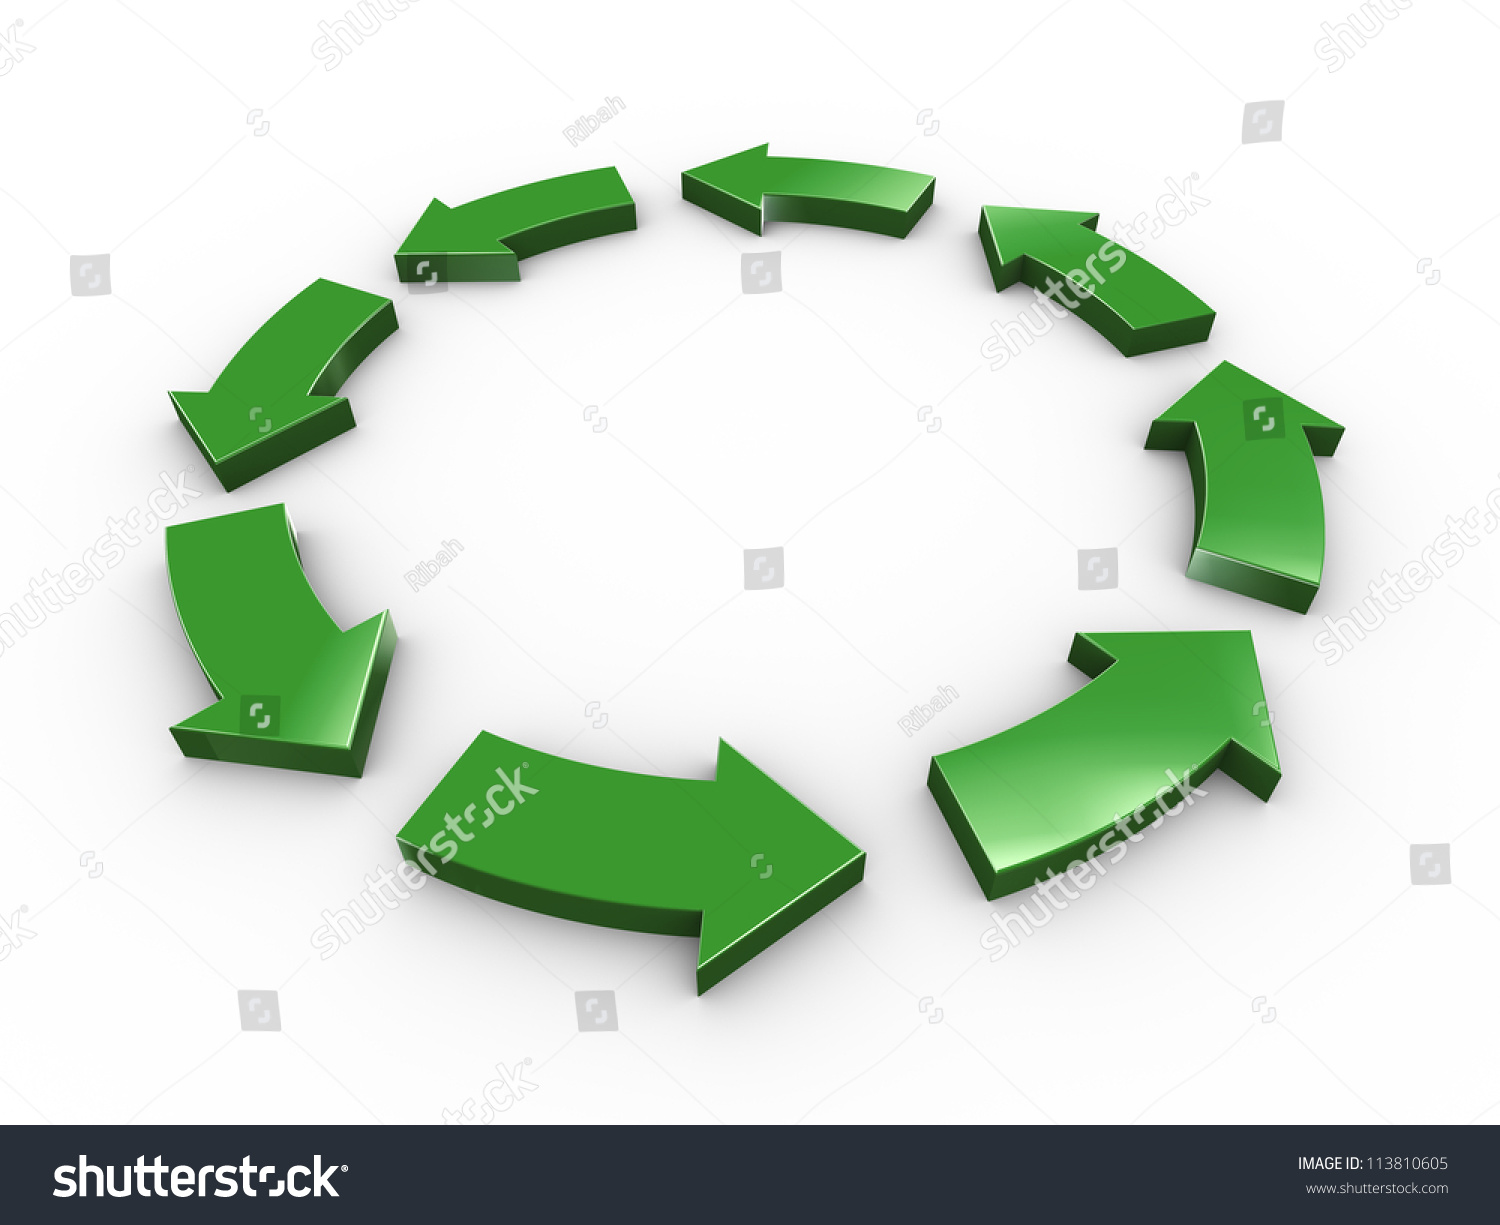 3d Illustration Of Green Circular Arrows Representing Concept Of ...